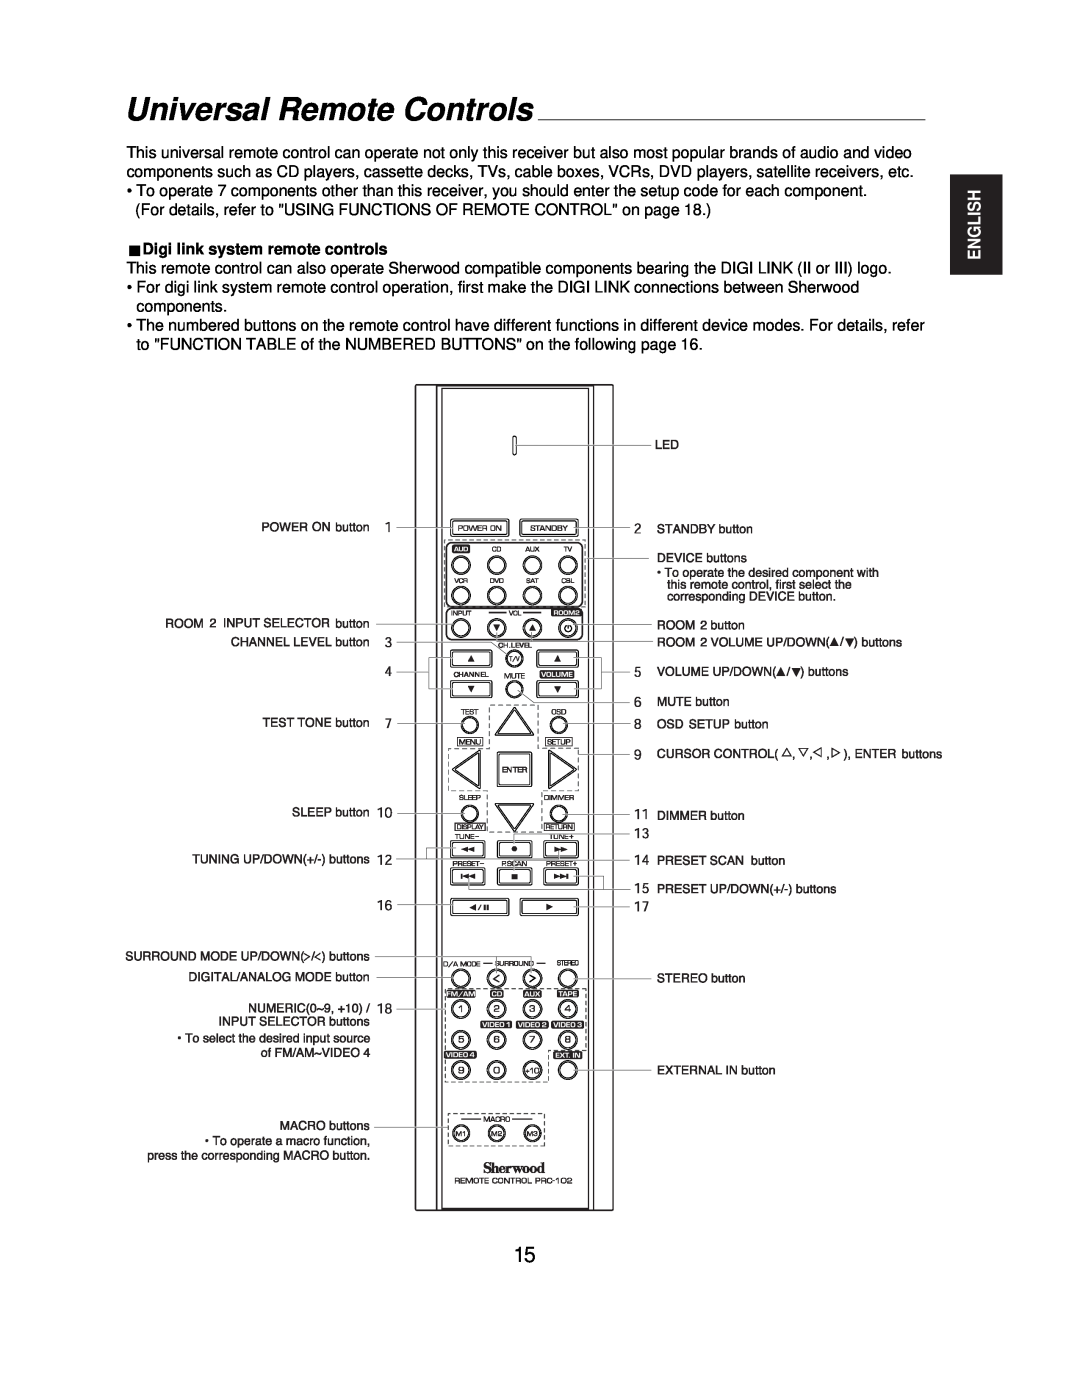 Sherwood R-771 manual Universal Remote Controls, Digi link system remote controls, English 